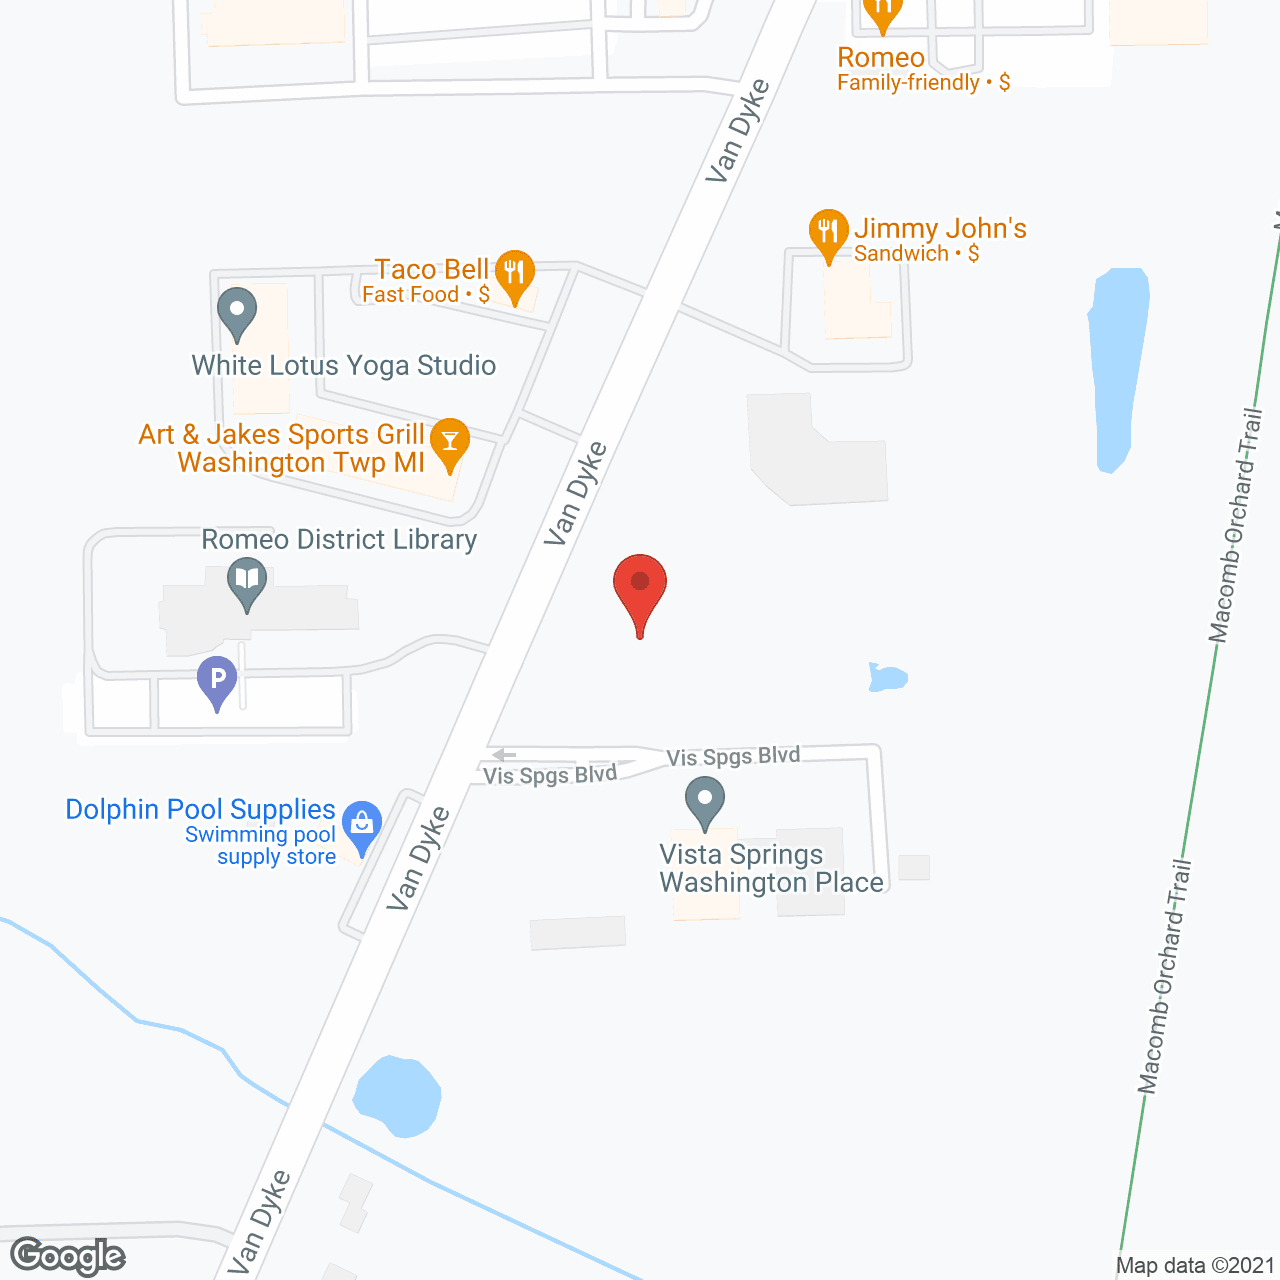 Vista Springs Washington Place in google map